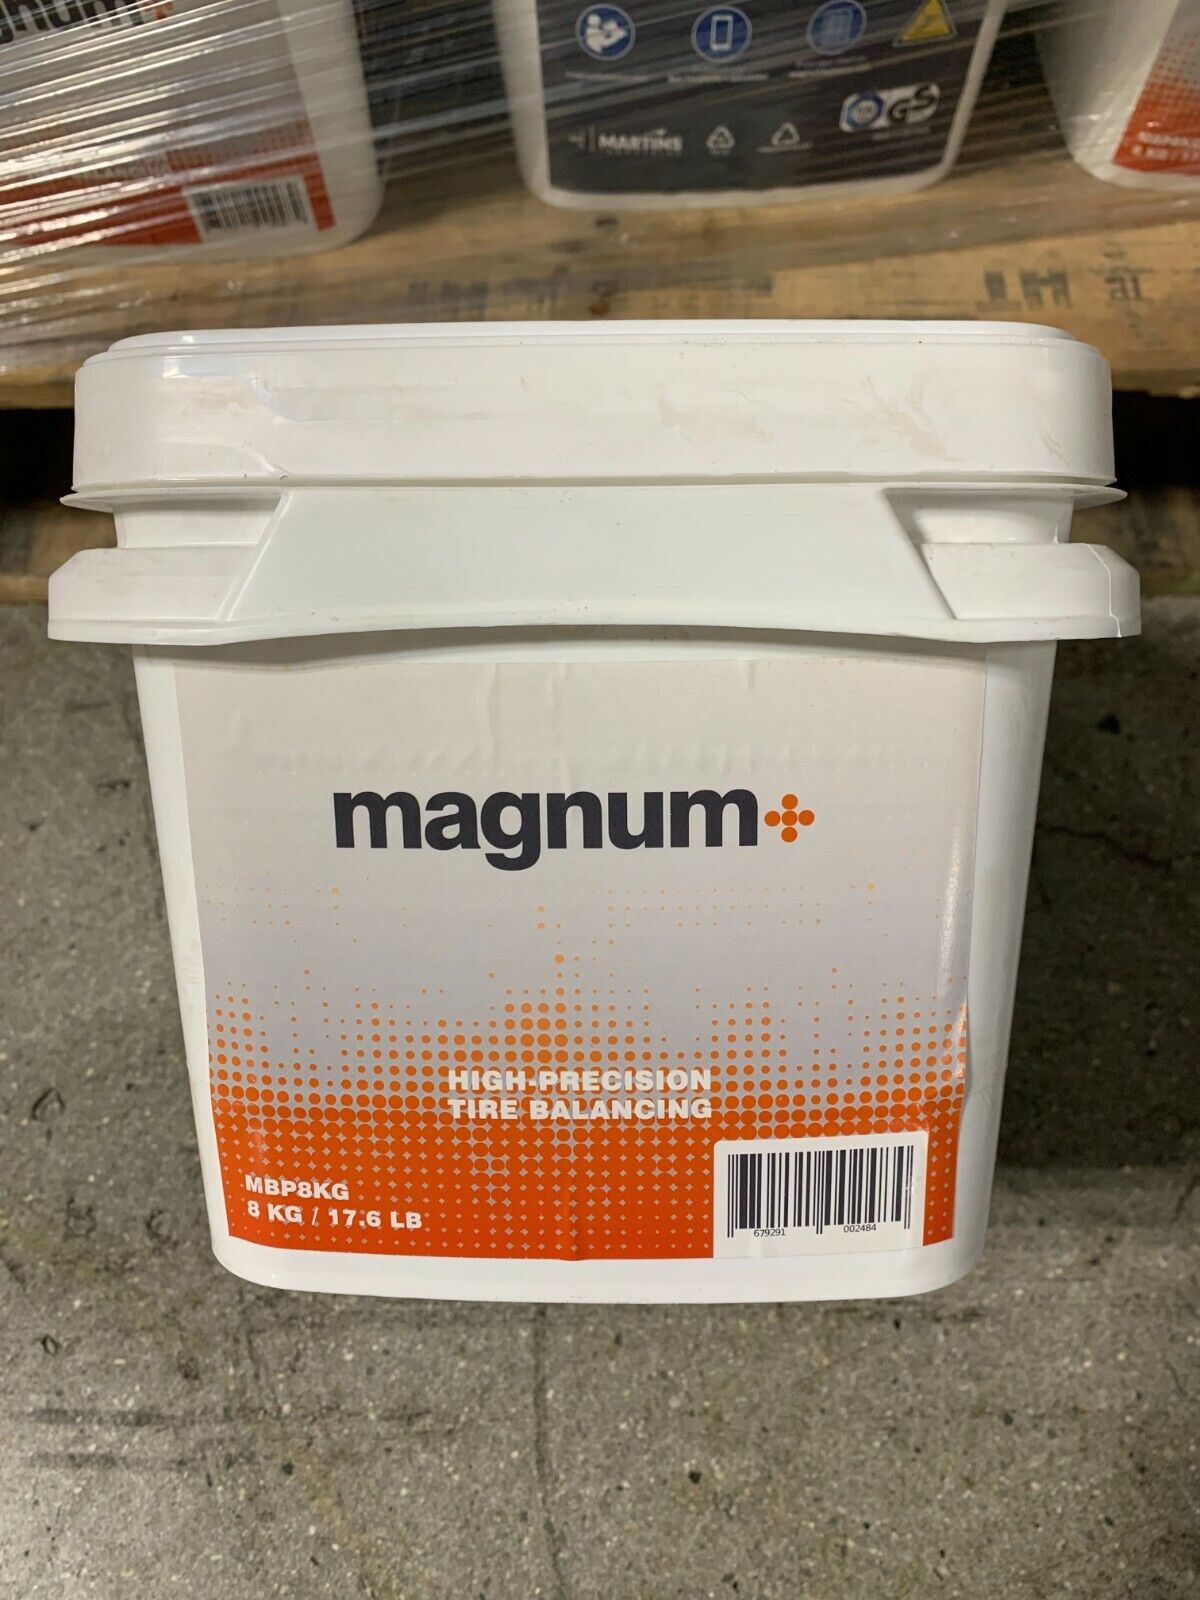 Magnum+ Tire Balancing Beads Bulk Tub 17.6 lb. with Scoop